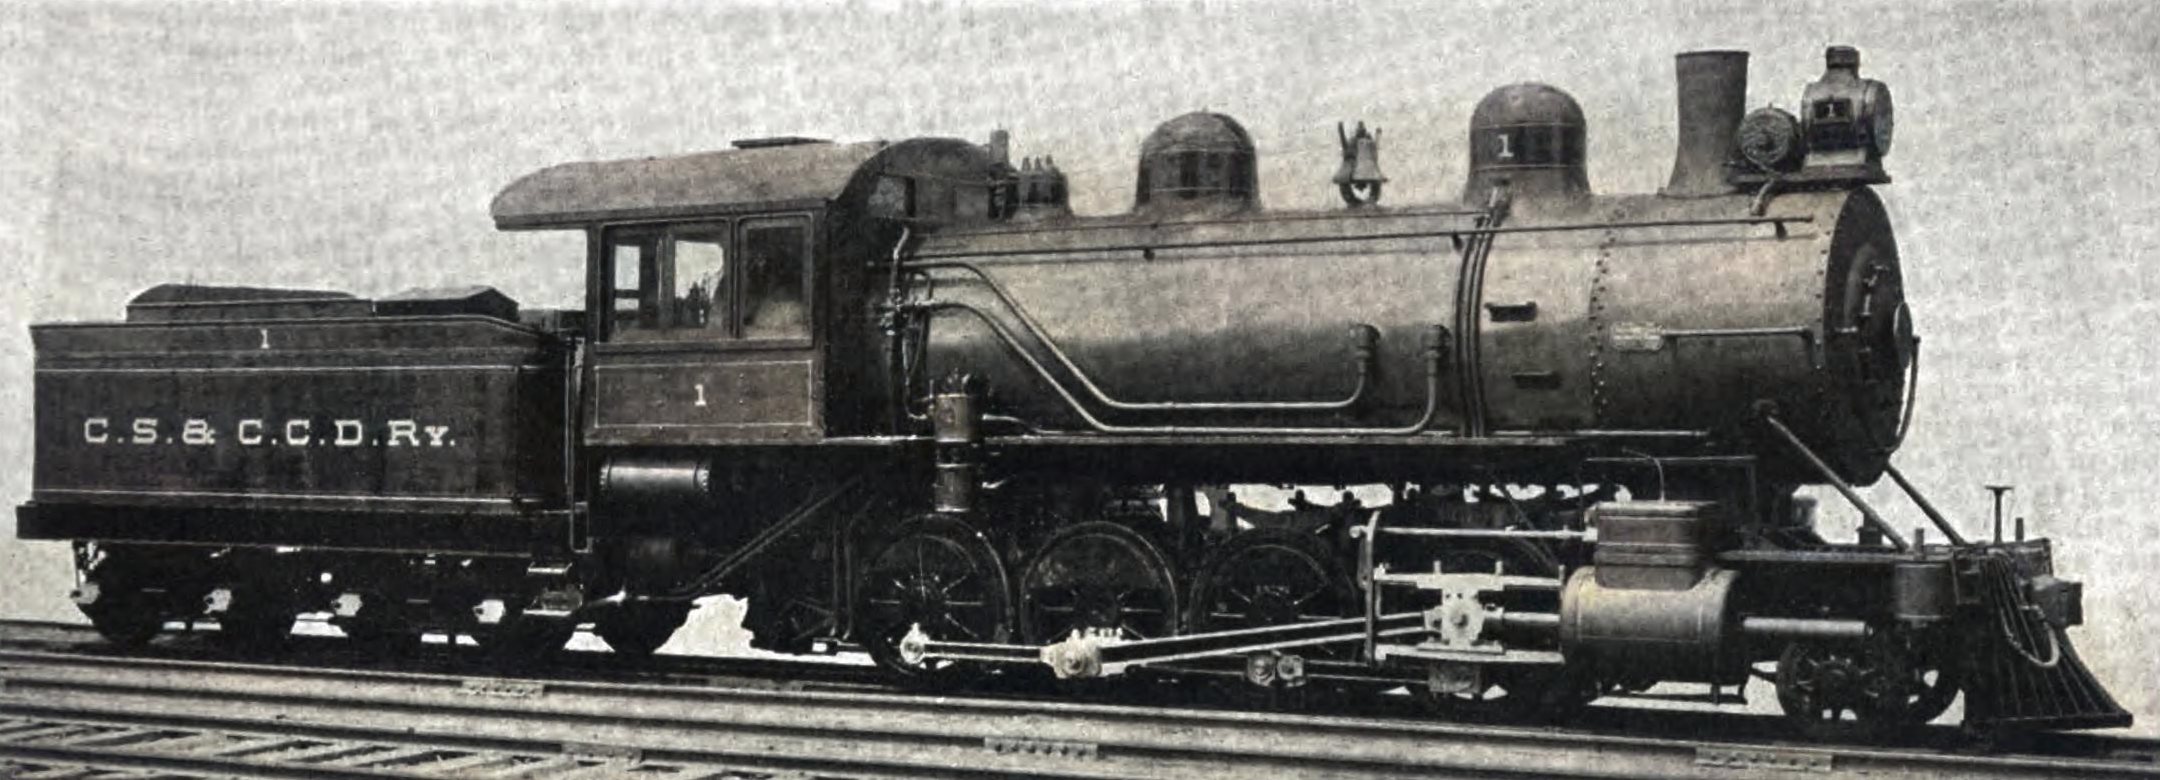 Schenectady Freight Locomotive - Colorado Springs & Cripple Creek District Railway No. 1